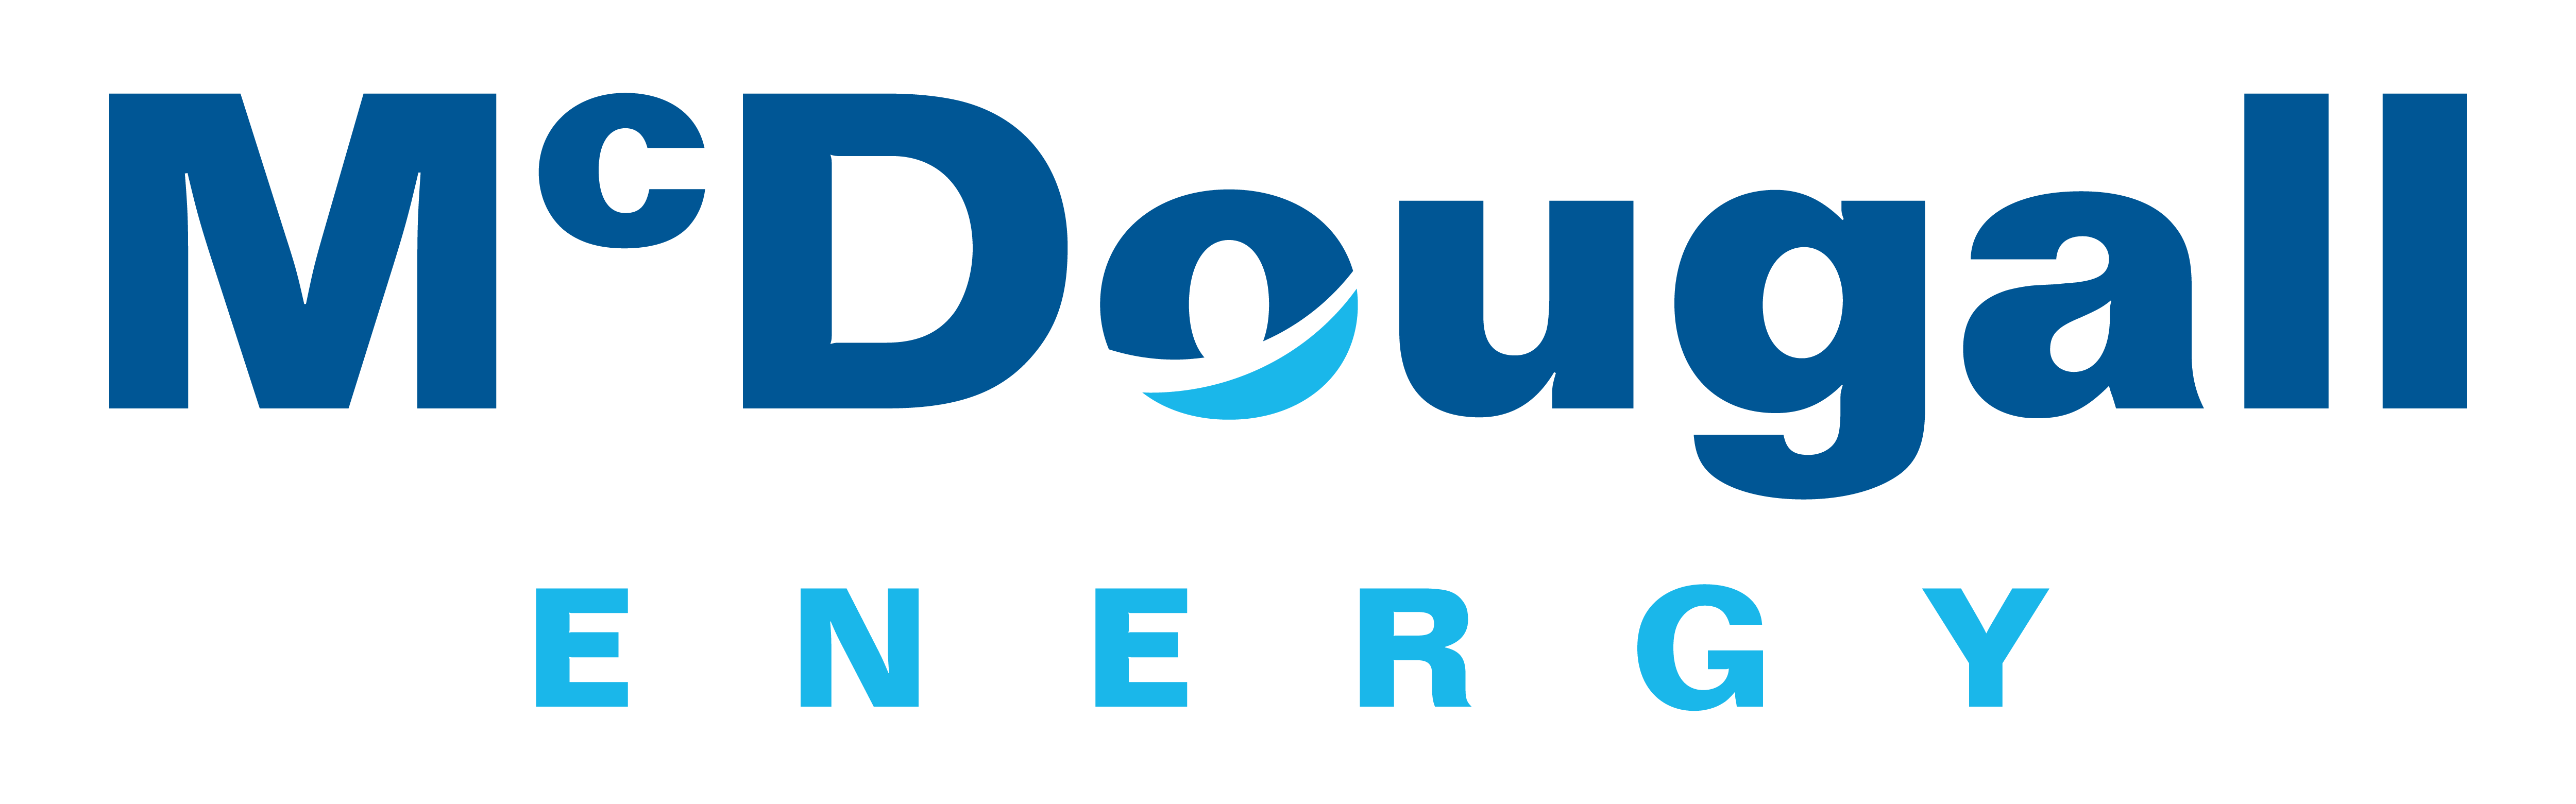 McDougall Energy